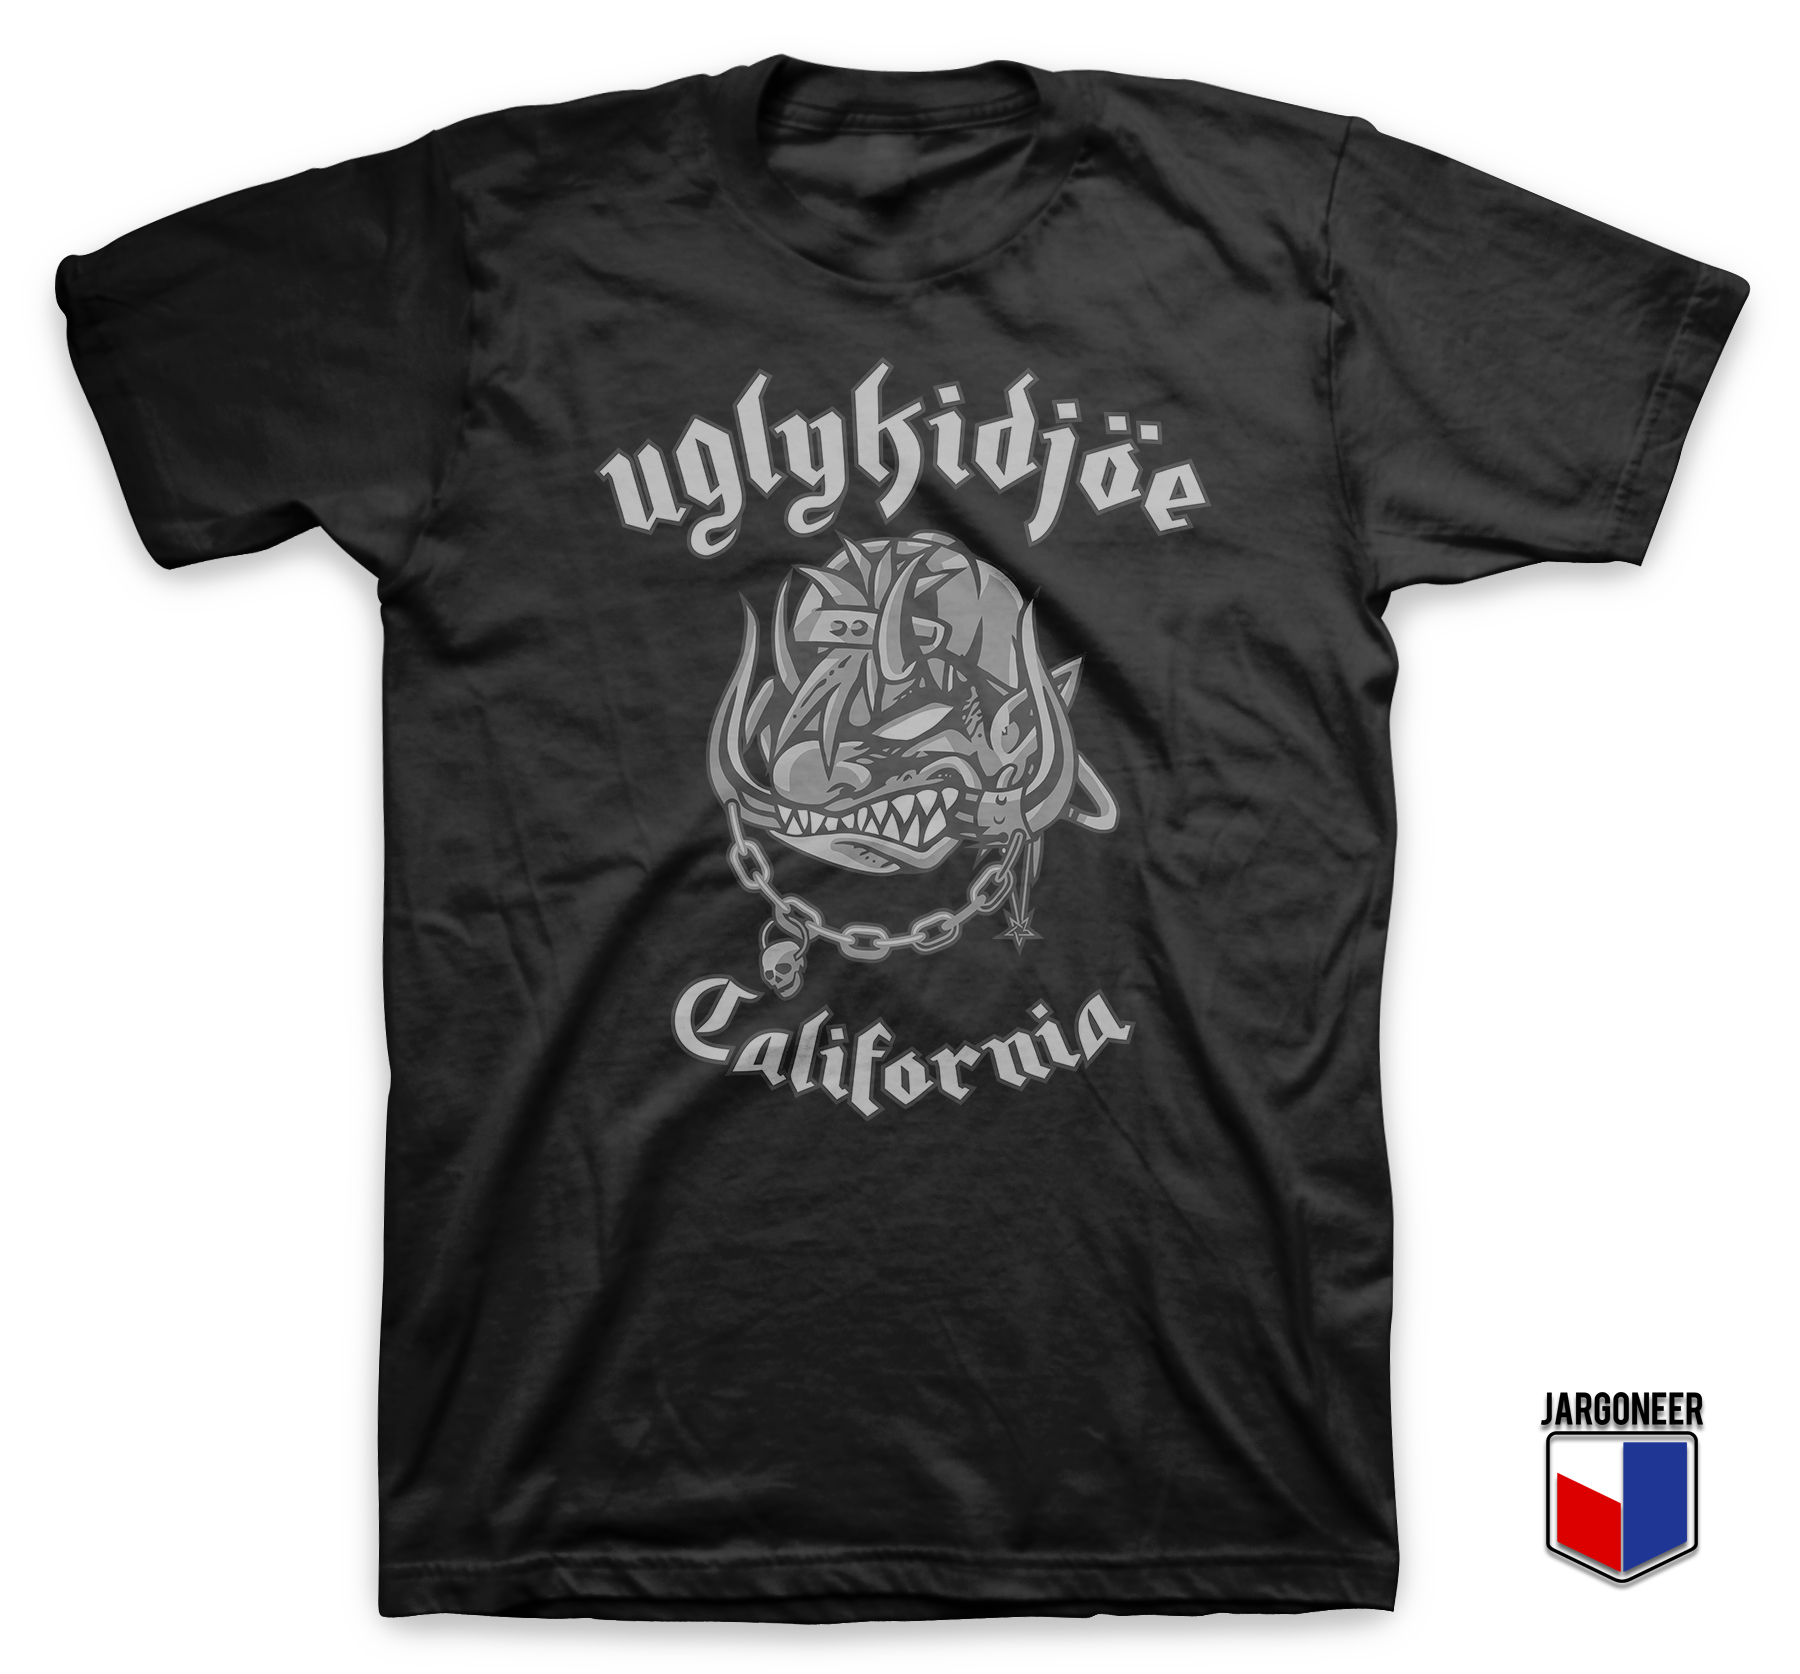 Ugly Kid Joe California Black T Shirt - Shop Unique Graphic Cool Shirt Designs